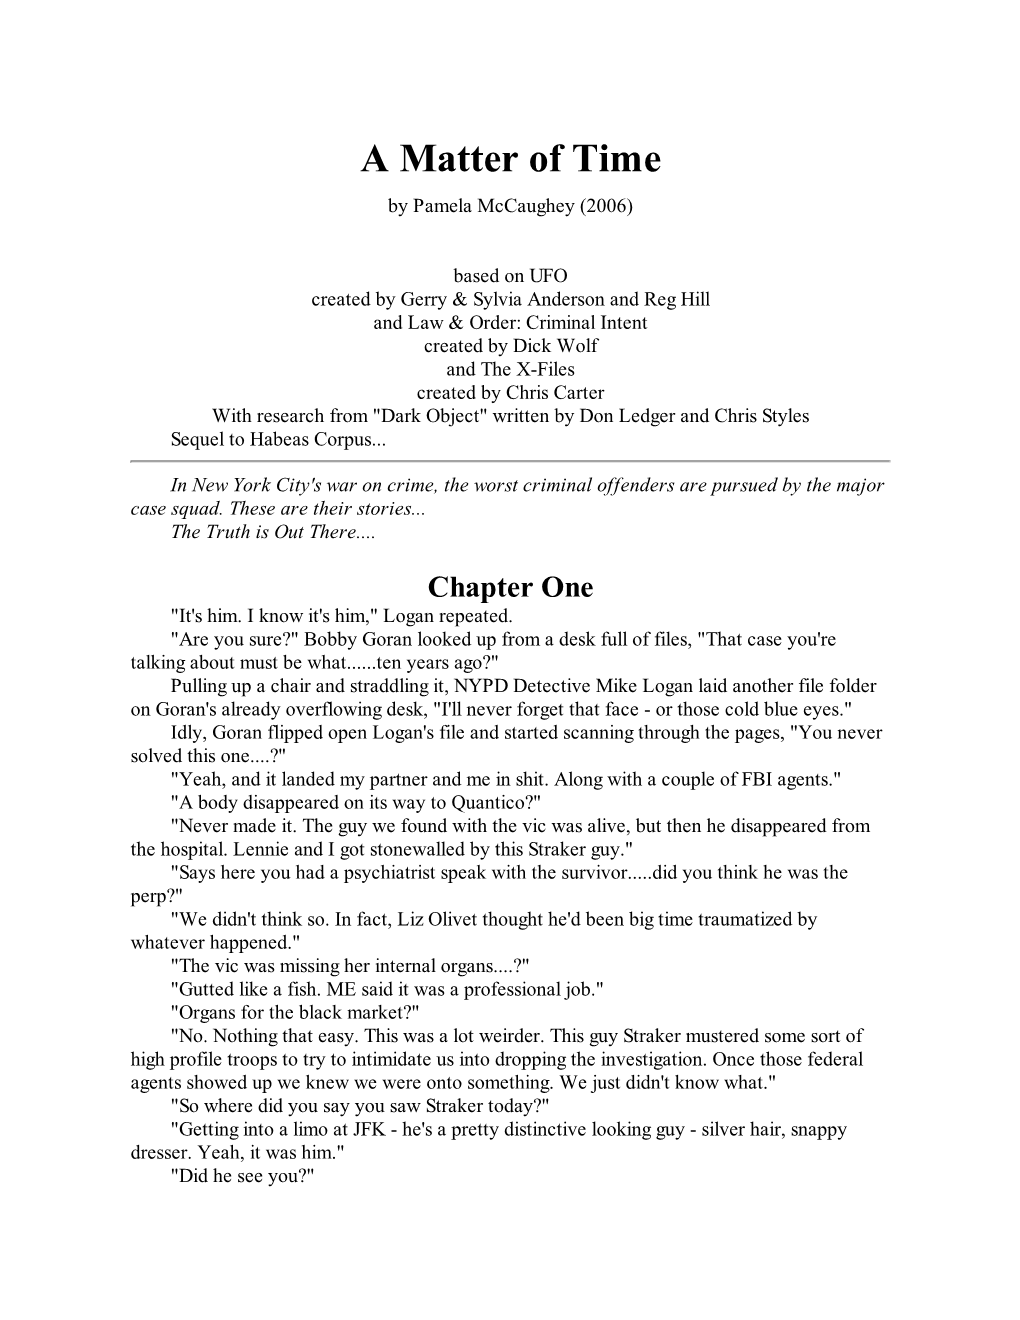 A Matter of Time by Pamela Mccaughey (2006)